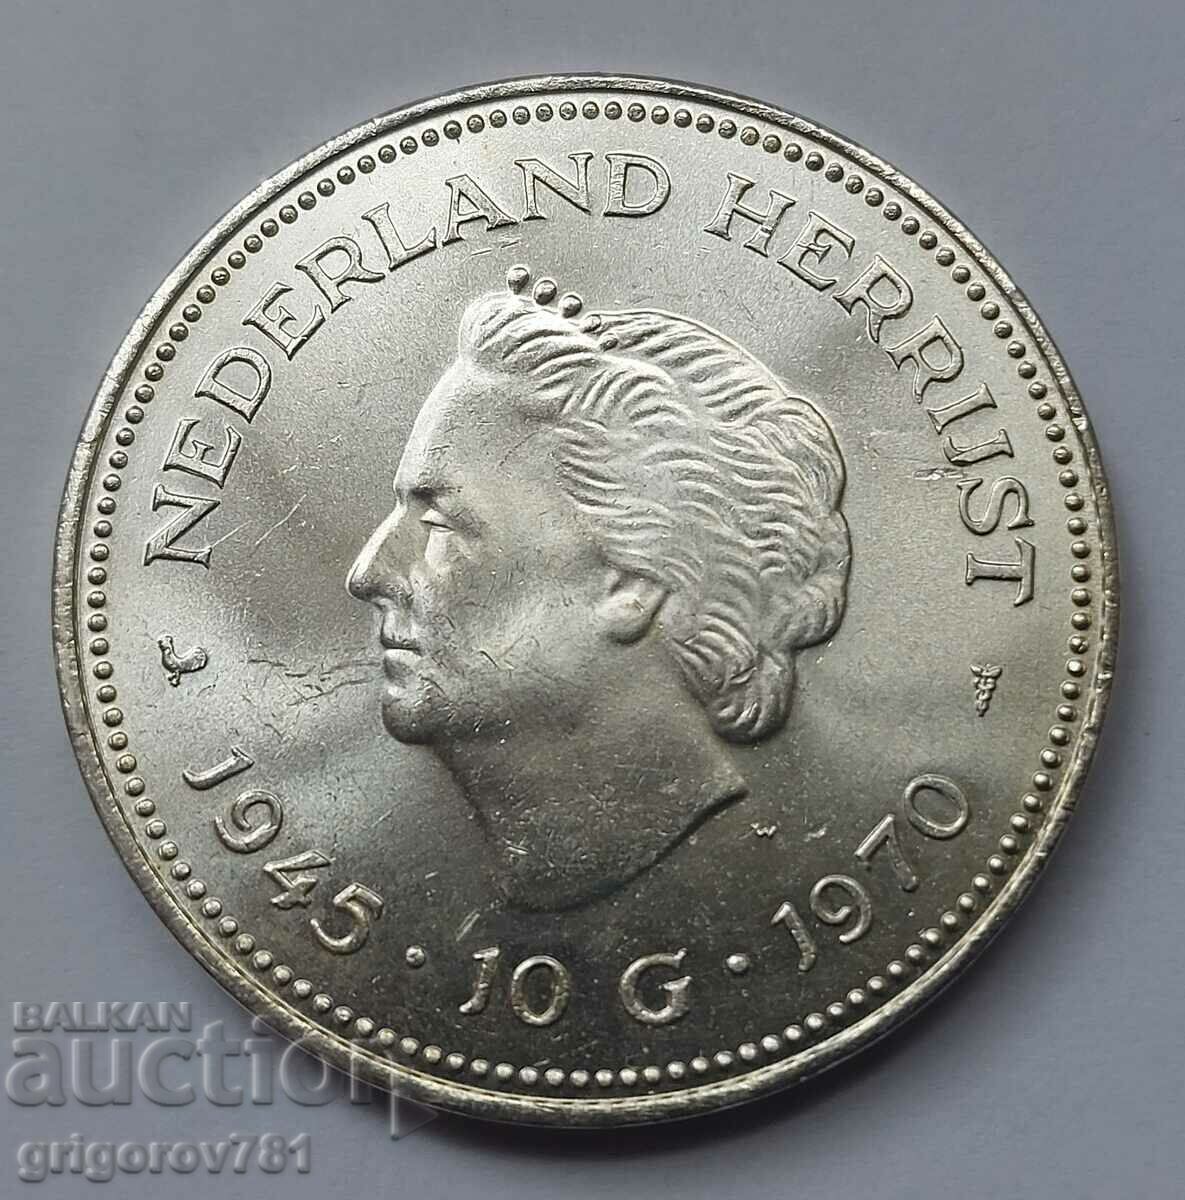 10 Guilder Silver Netherlands 1970 - Silver Coin #3